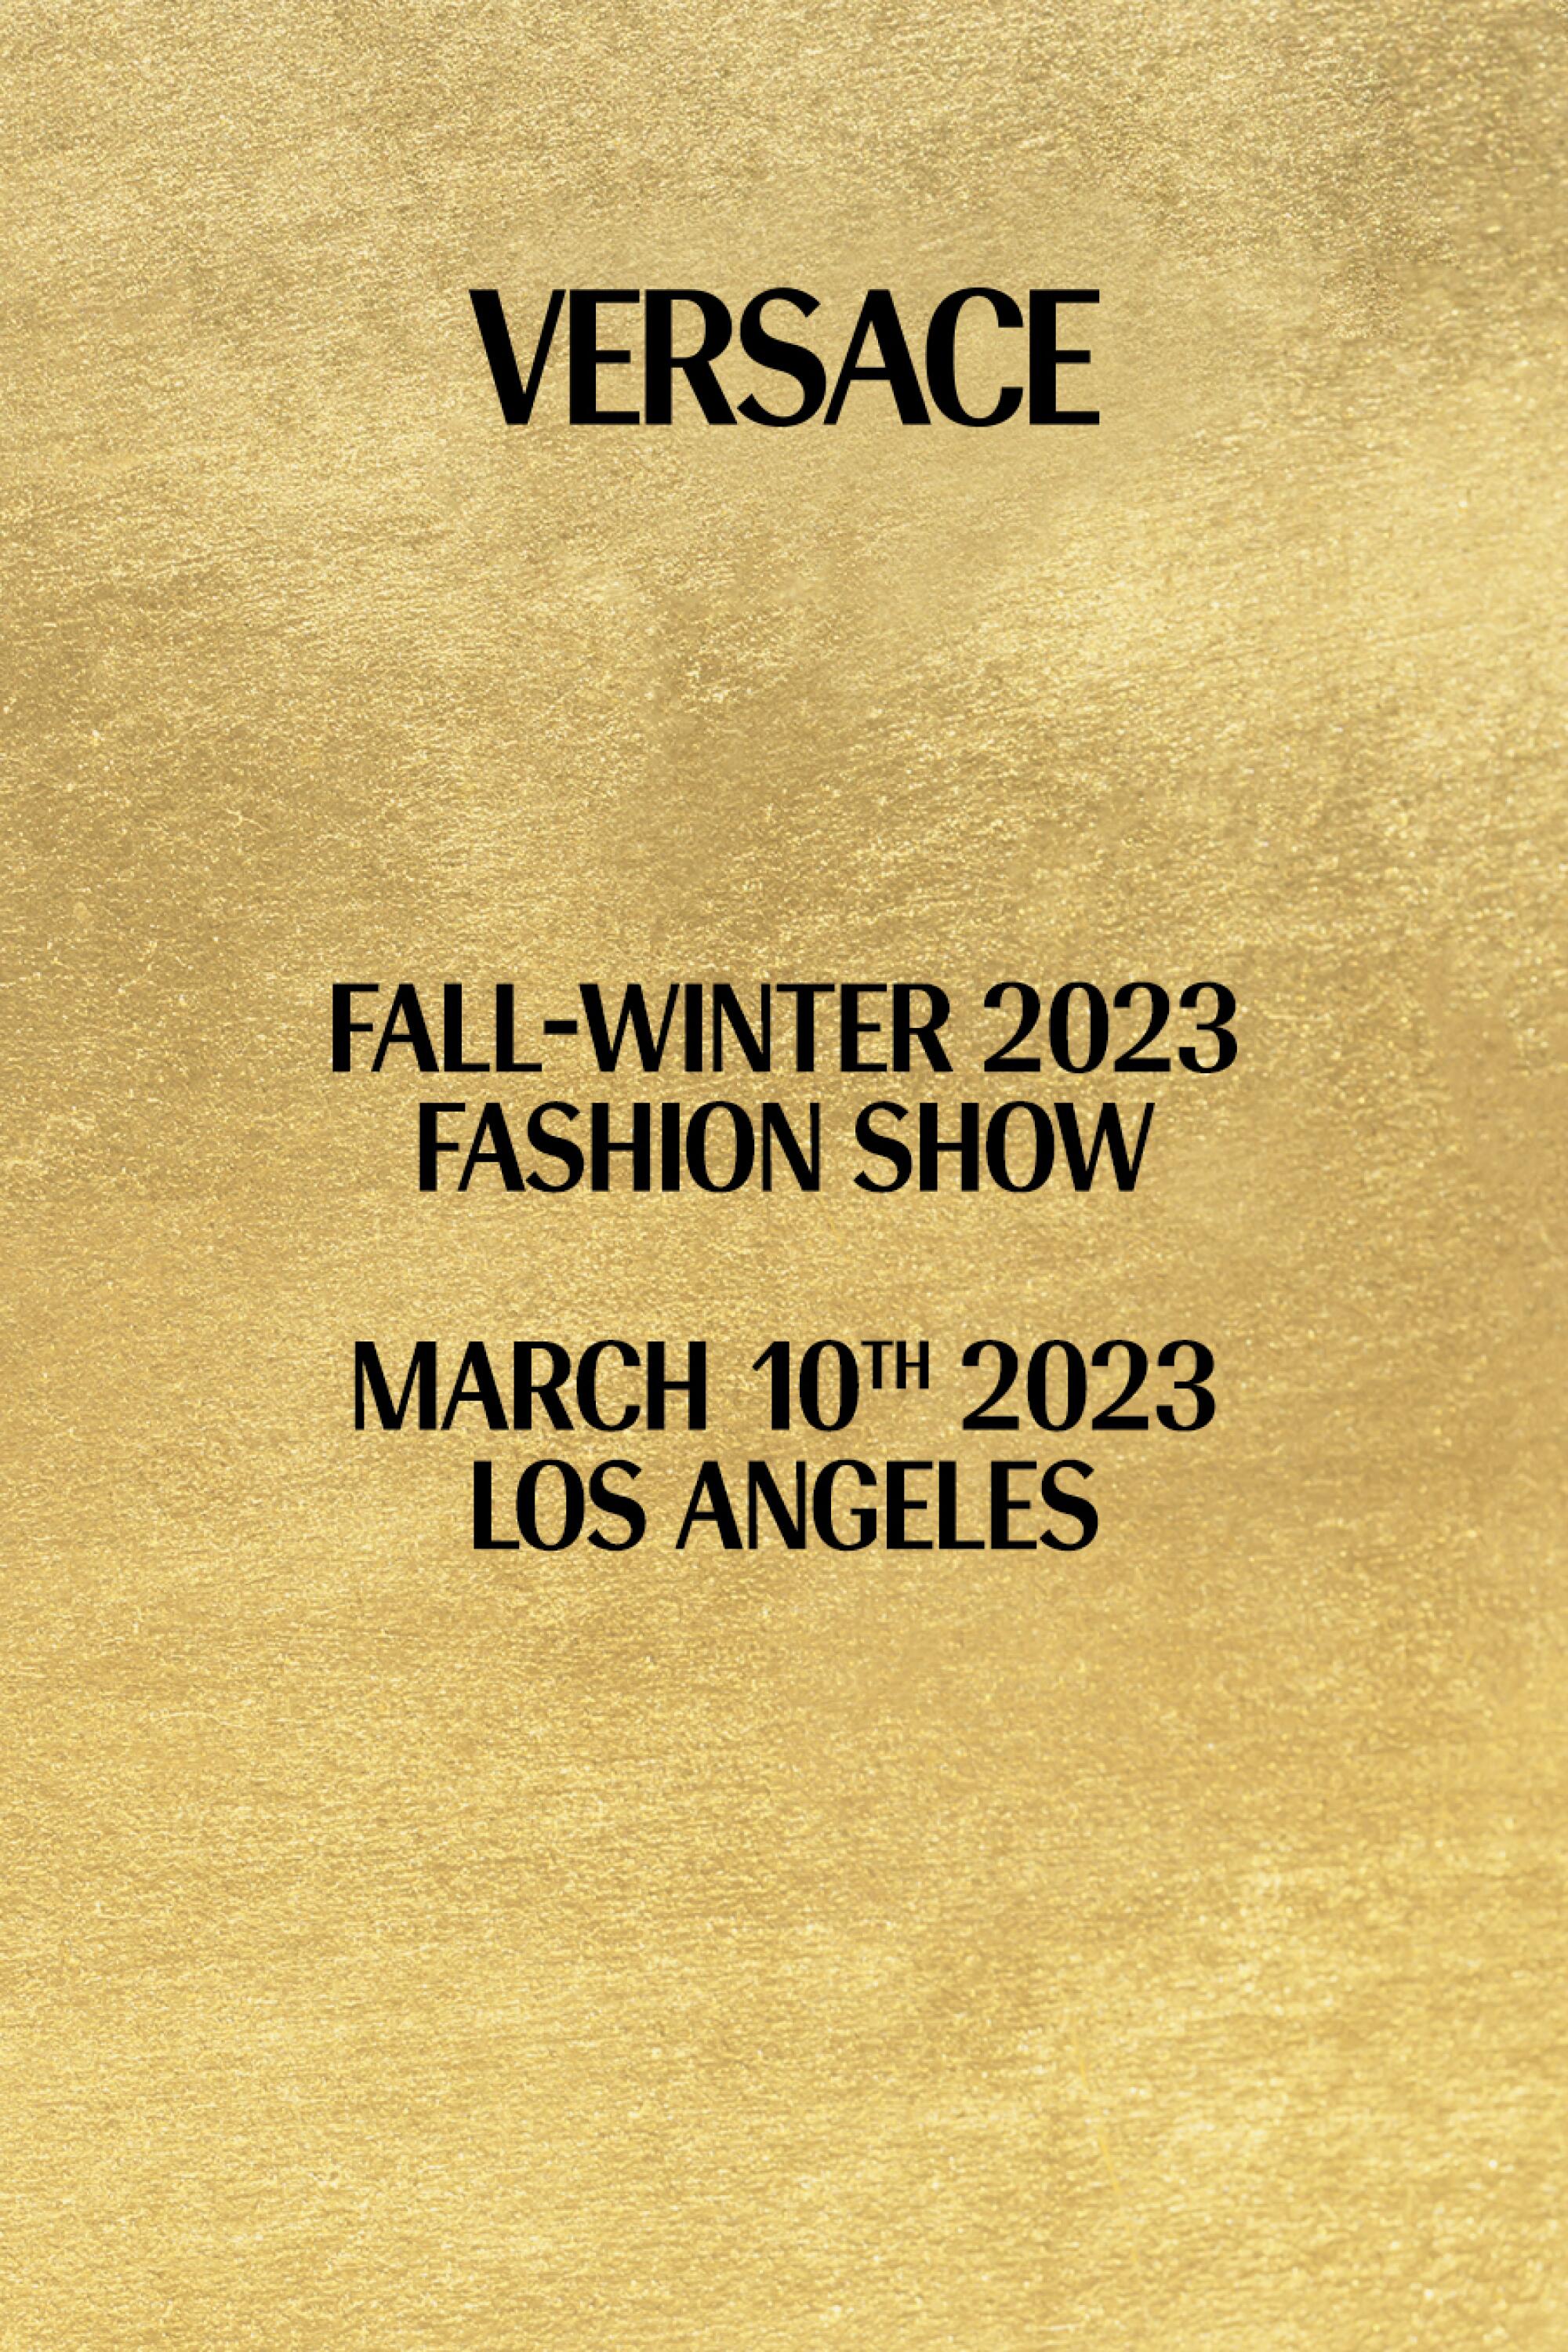 Los Angeles: Louis Vuitton pop-up store, superfuture®